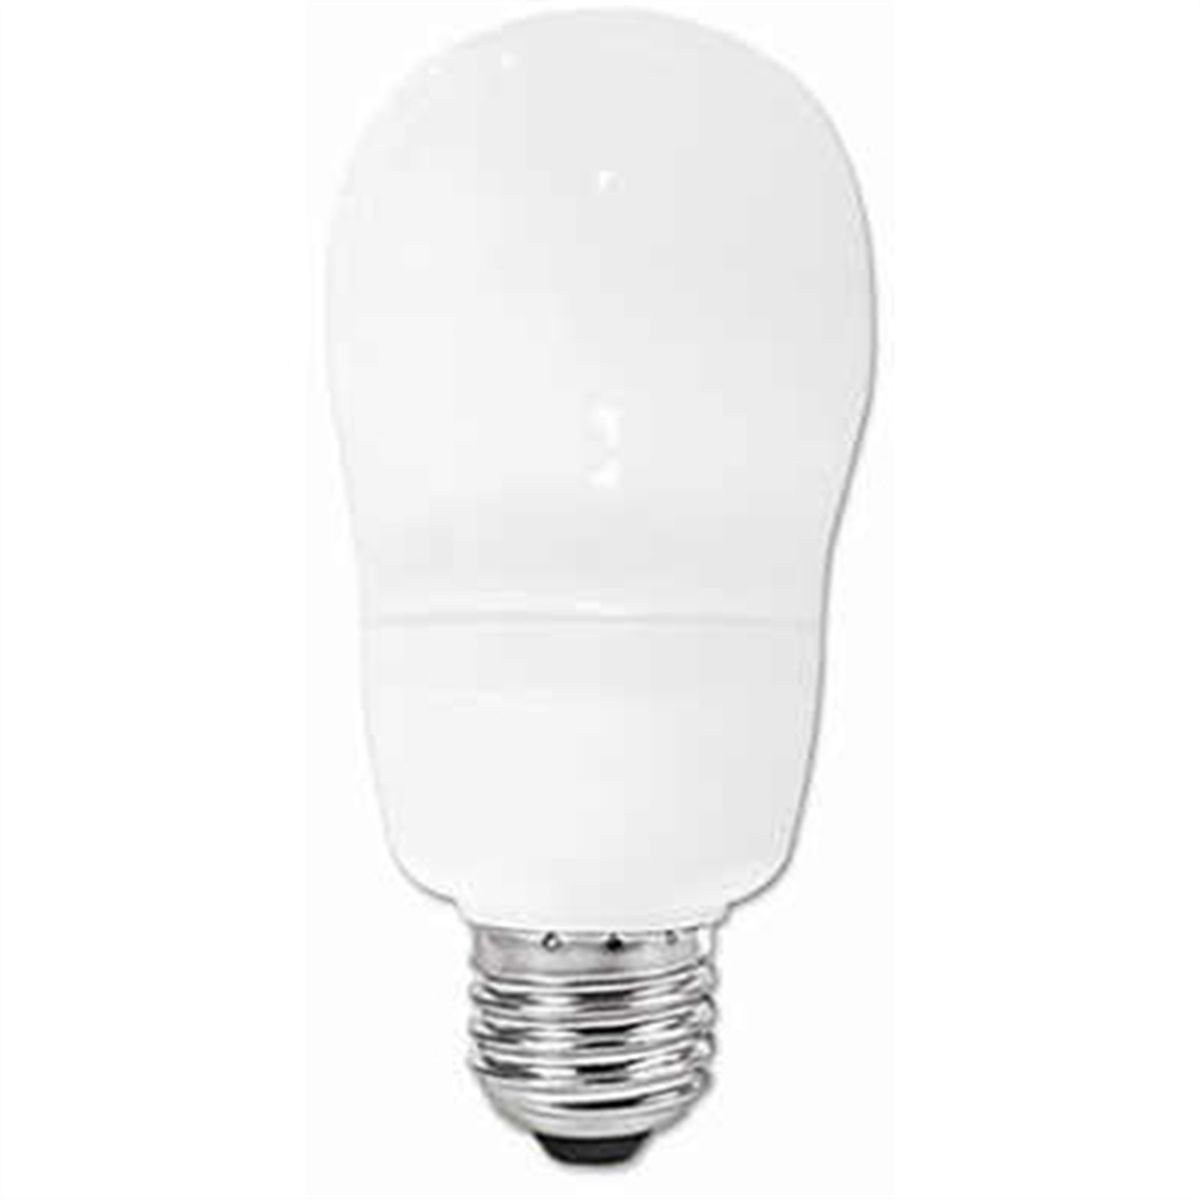 16 Watt CFL A19 Type Bulb